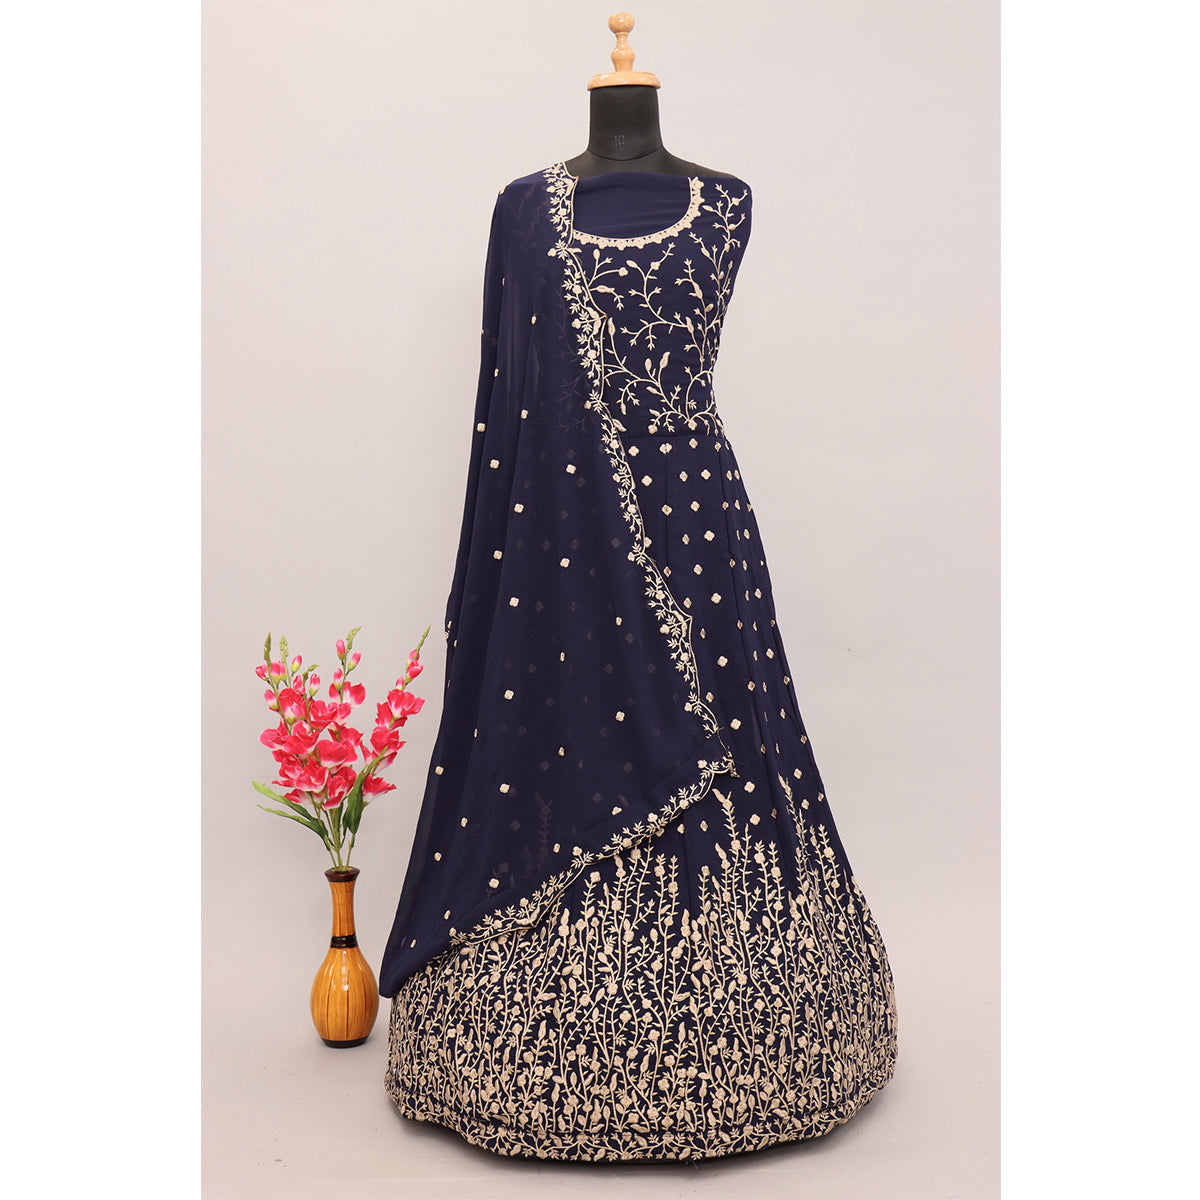 Shafnufab Navy Blue Designer Heavy Embroidered Georgette Wedding Anarkali Suit